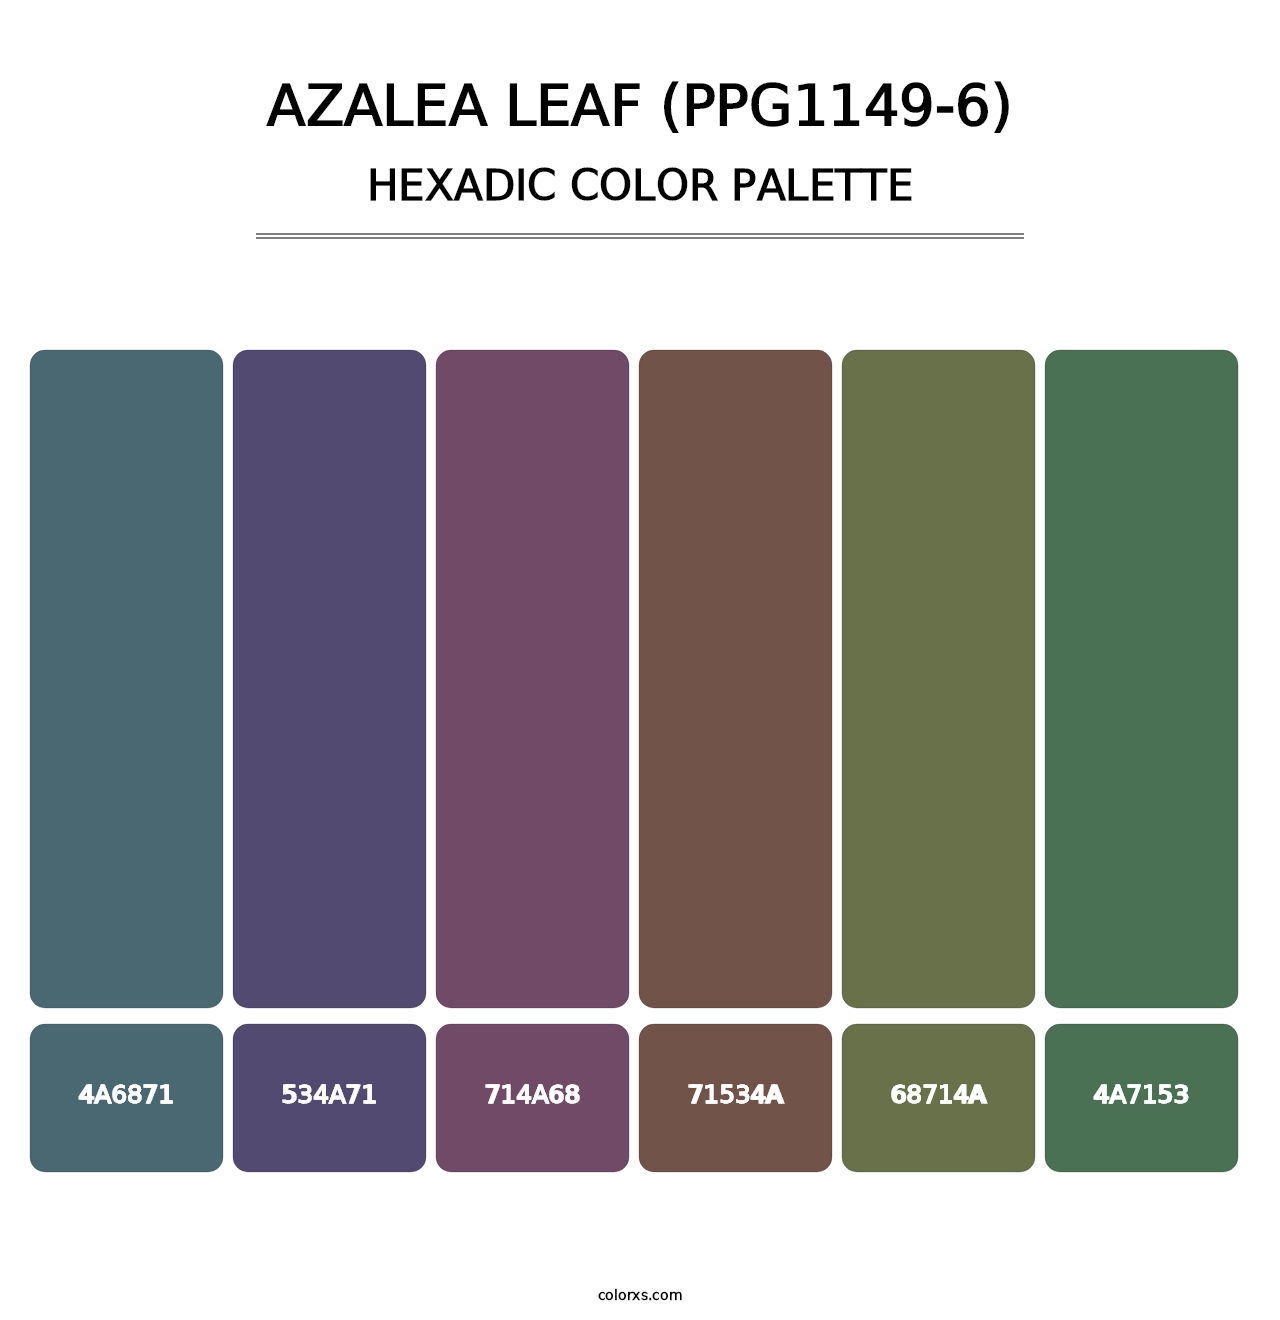 Azalea Leaf (PPG1149-6) - Hexadic Color Palette